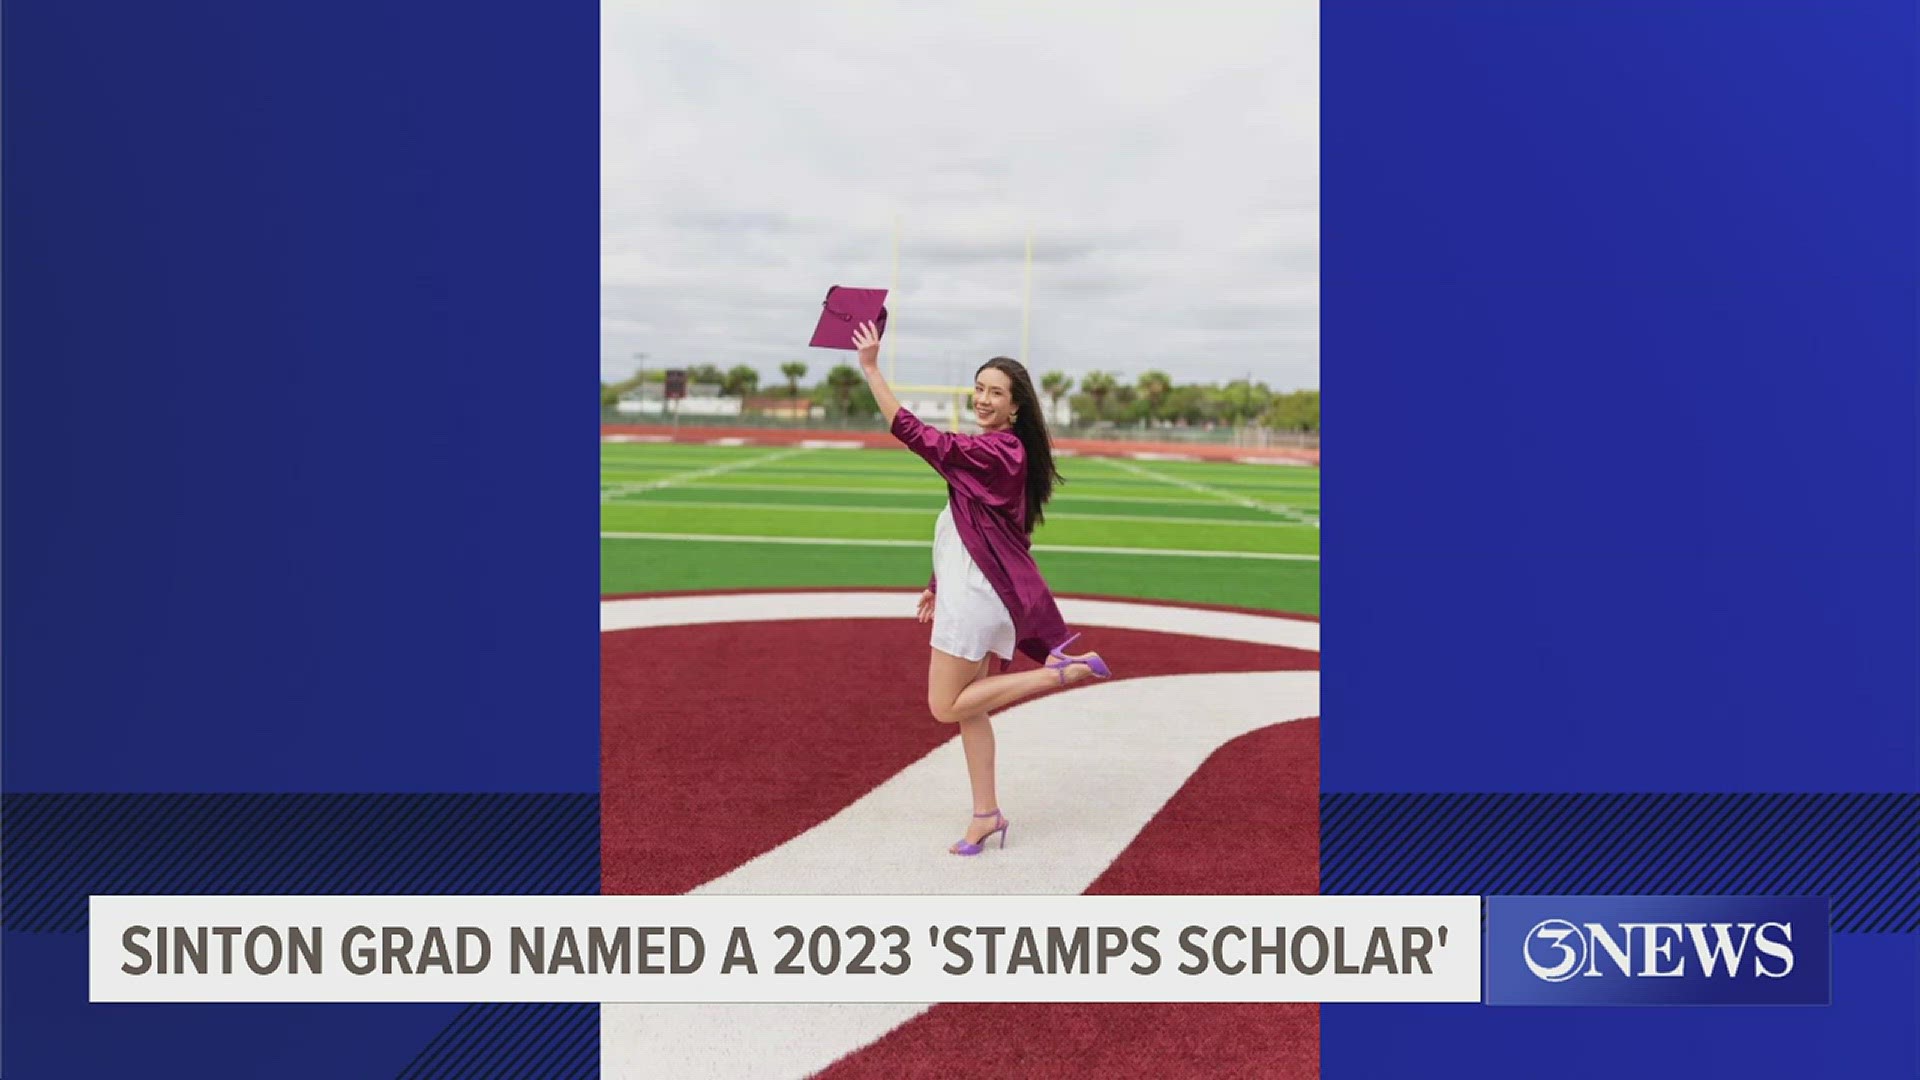 Sinton graduating senior named a 2023 Stamps Scholar